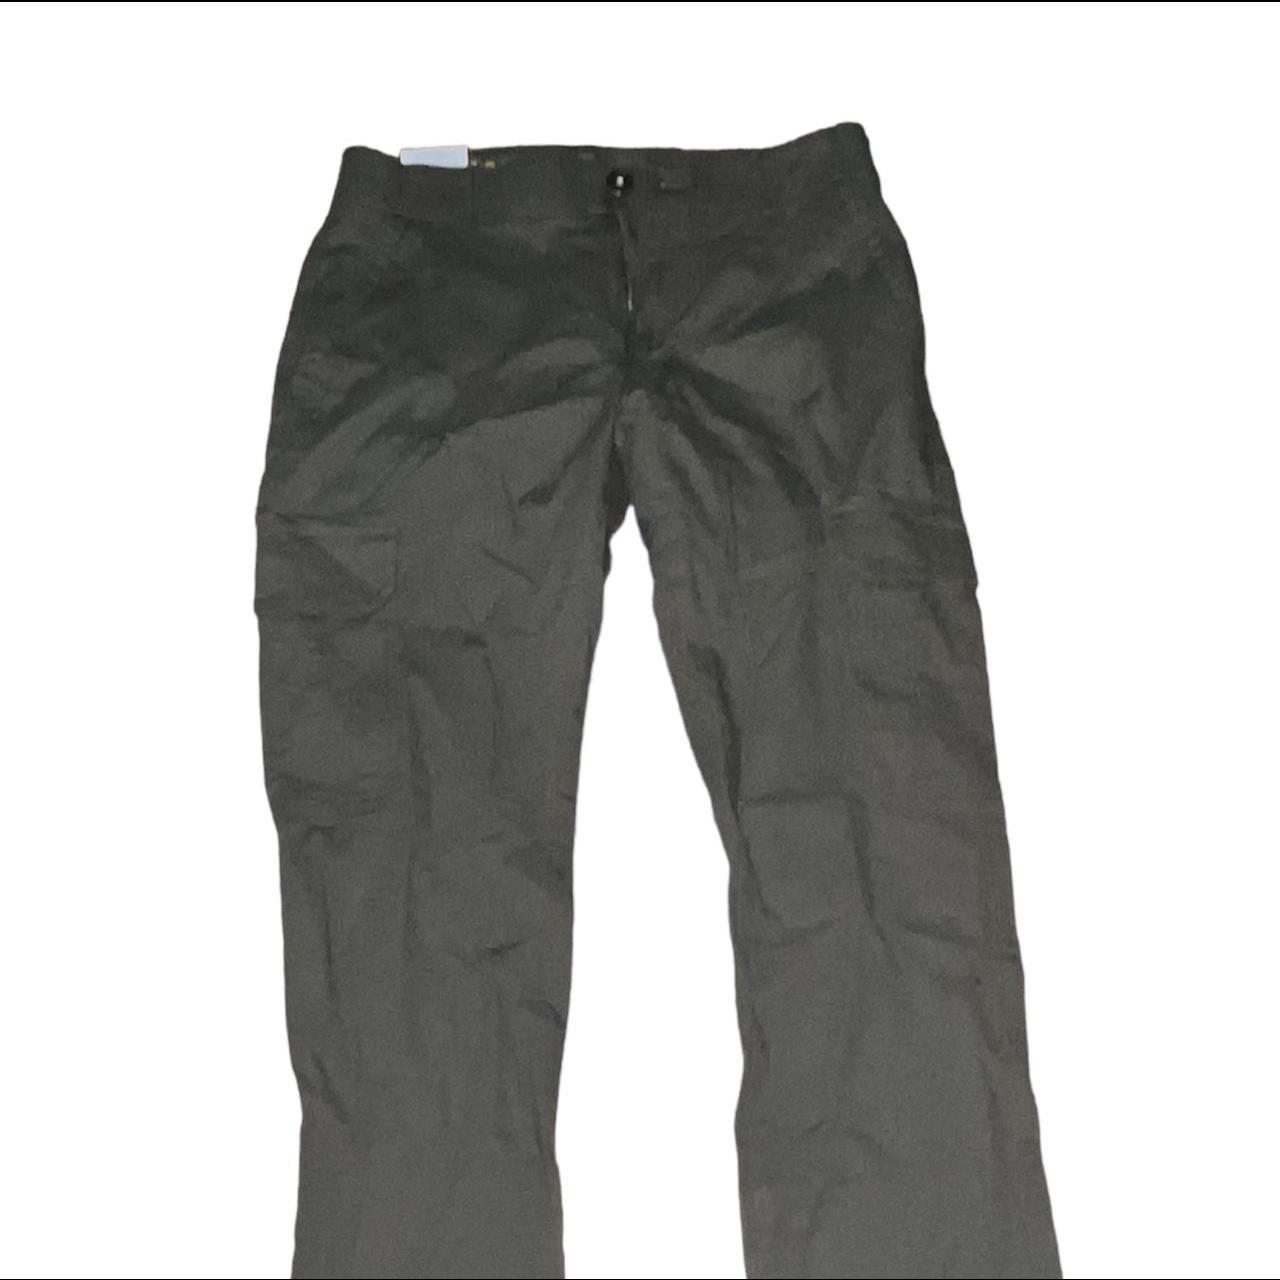 Lee jeans regular fit cargo pant waist 32 length... - Depop